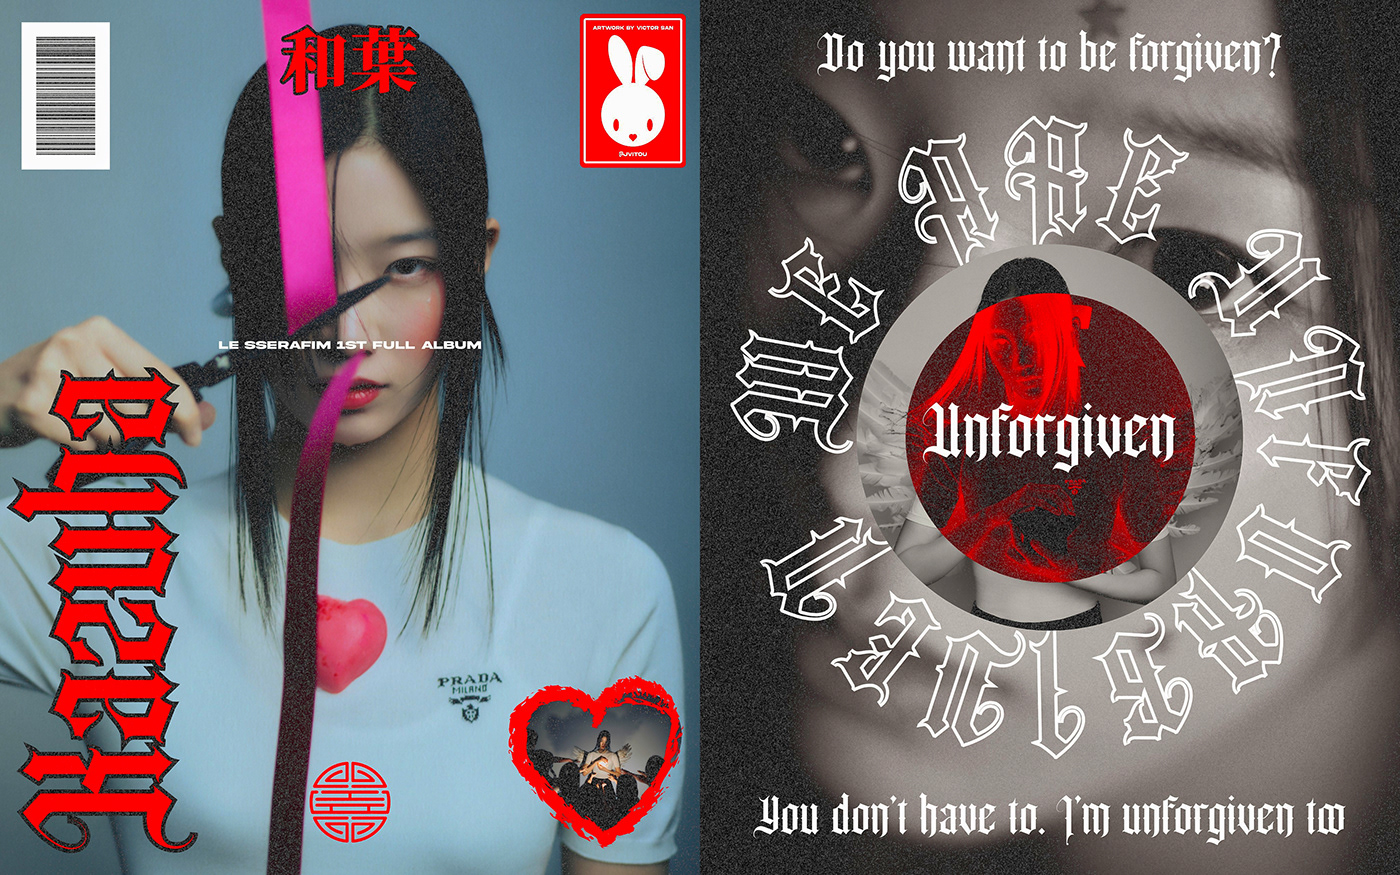 kpop art artwork design gráfico Digital Art  graphic design  kpop fanart kpop poster le sserafim Unforgiven